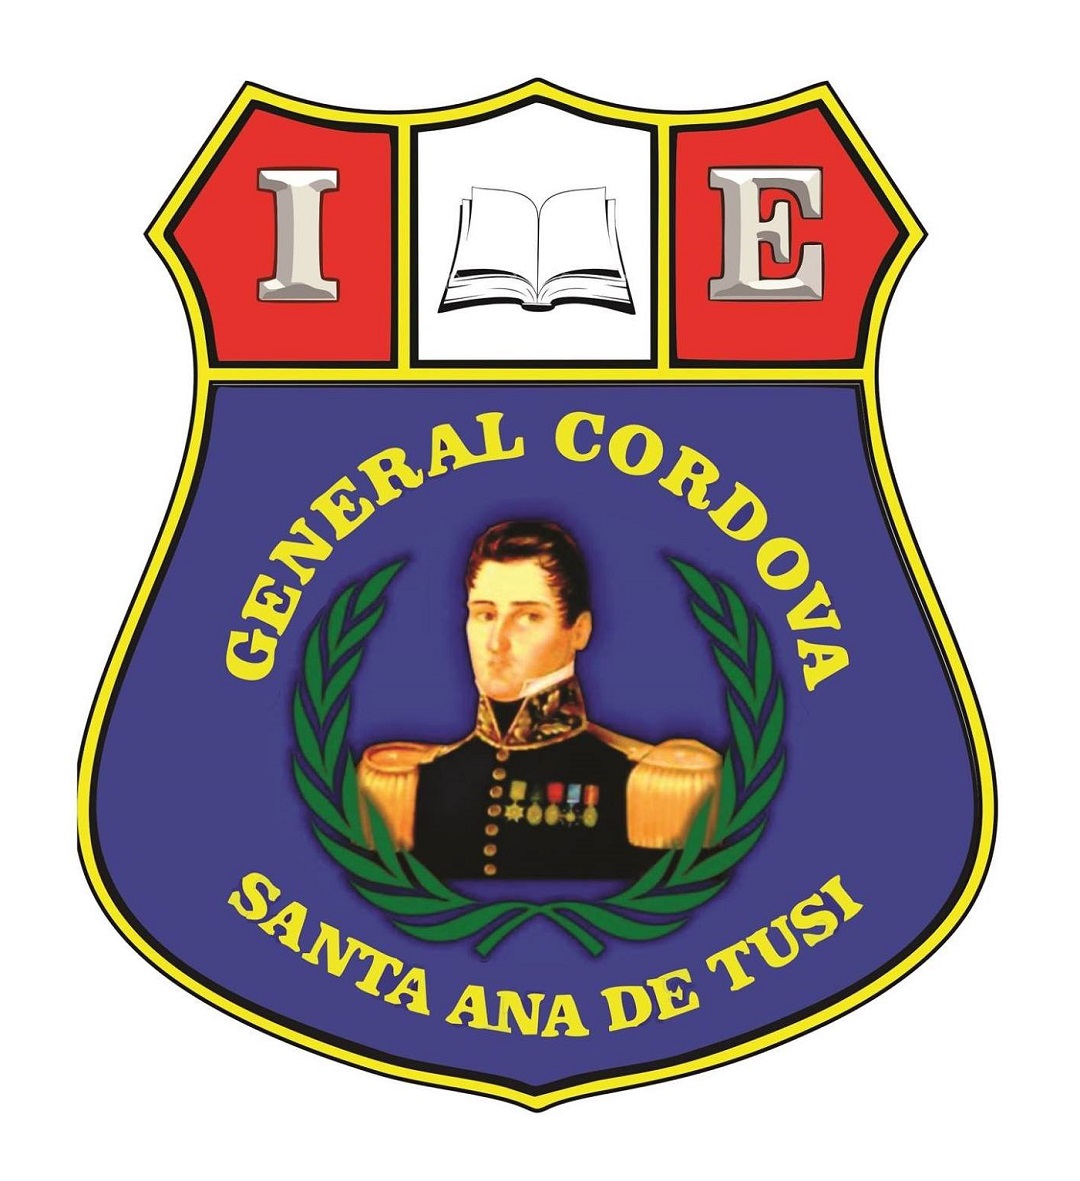 Colegio GENERAL CORDOVA